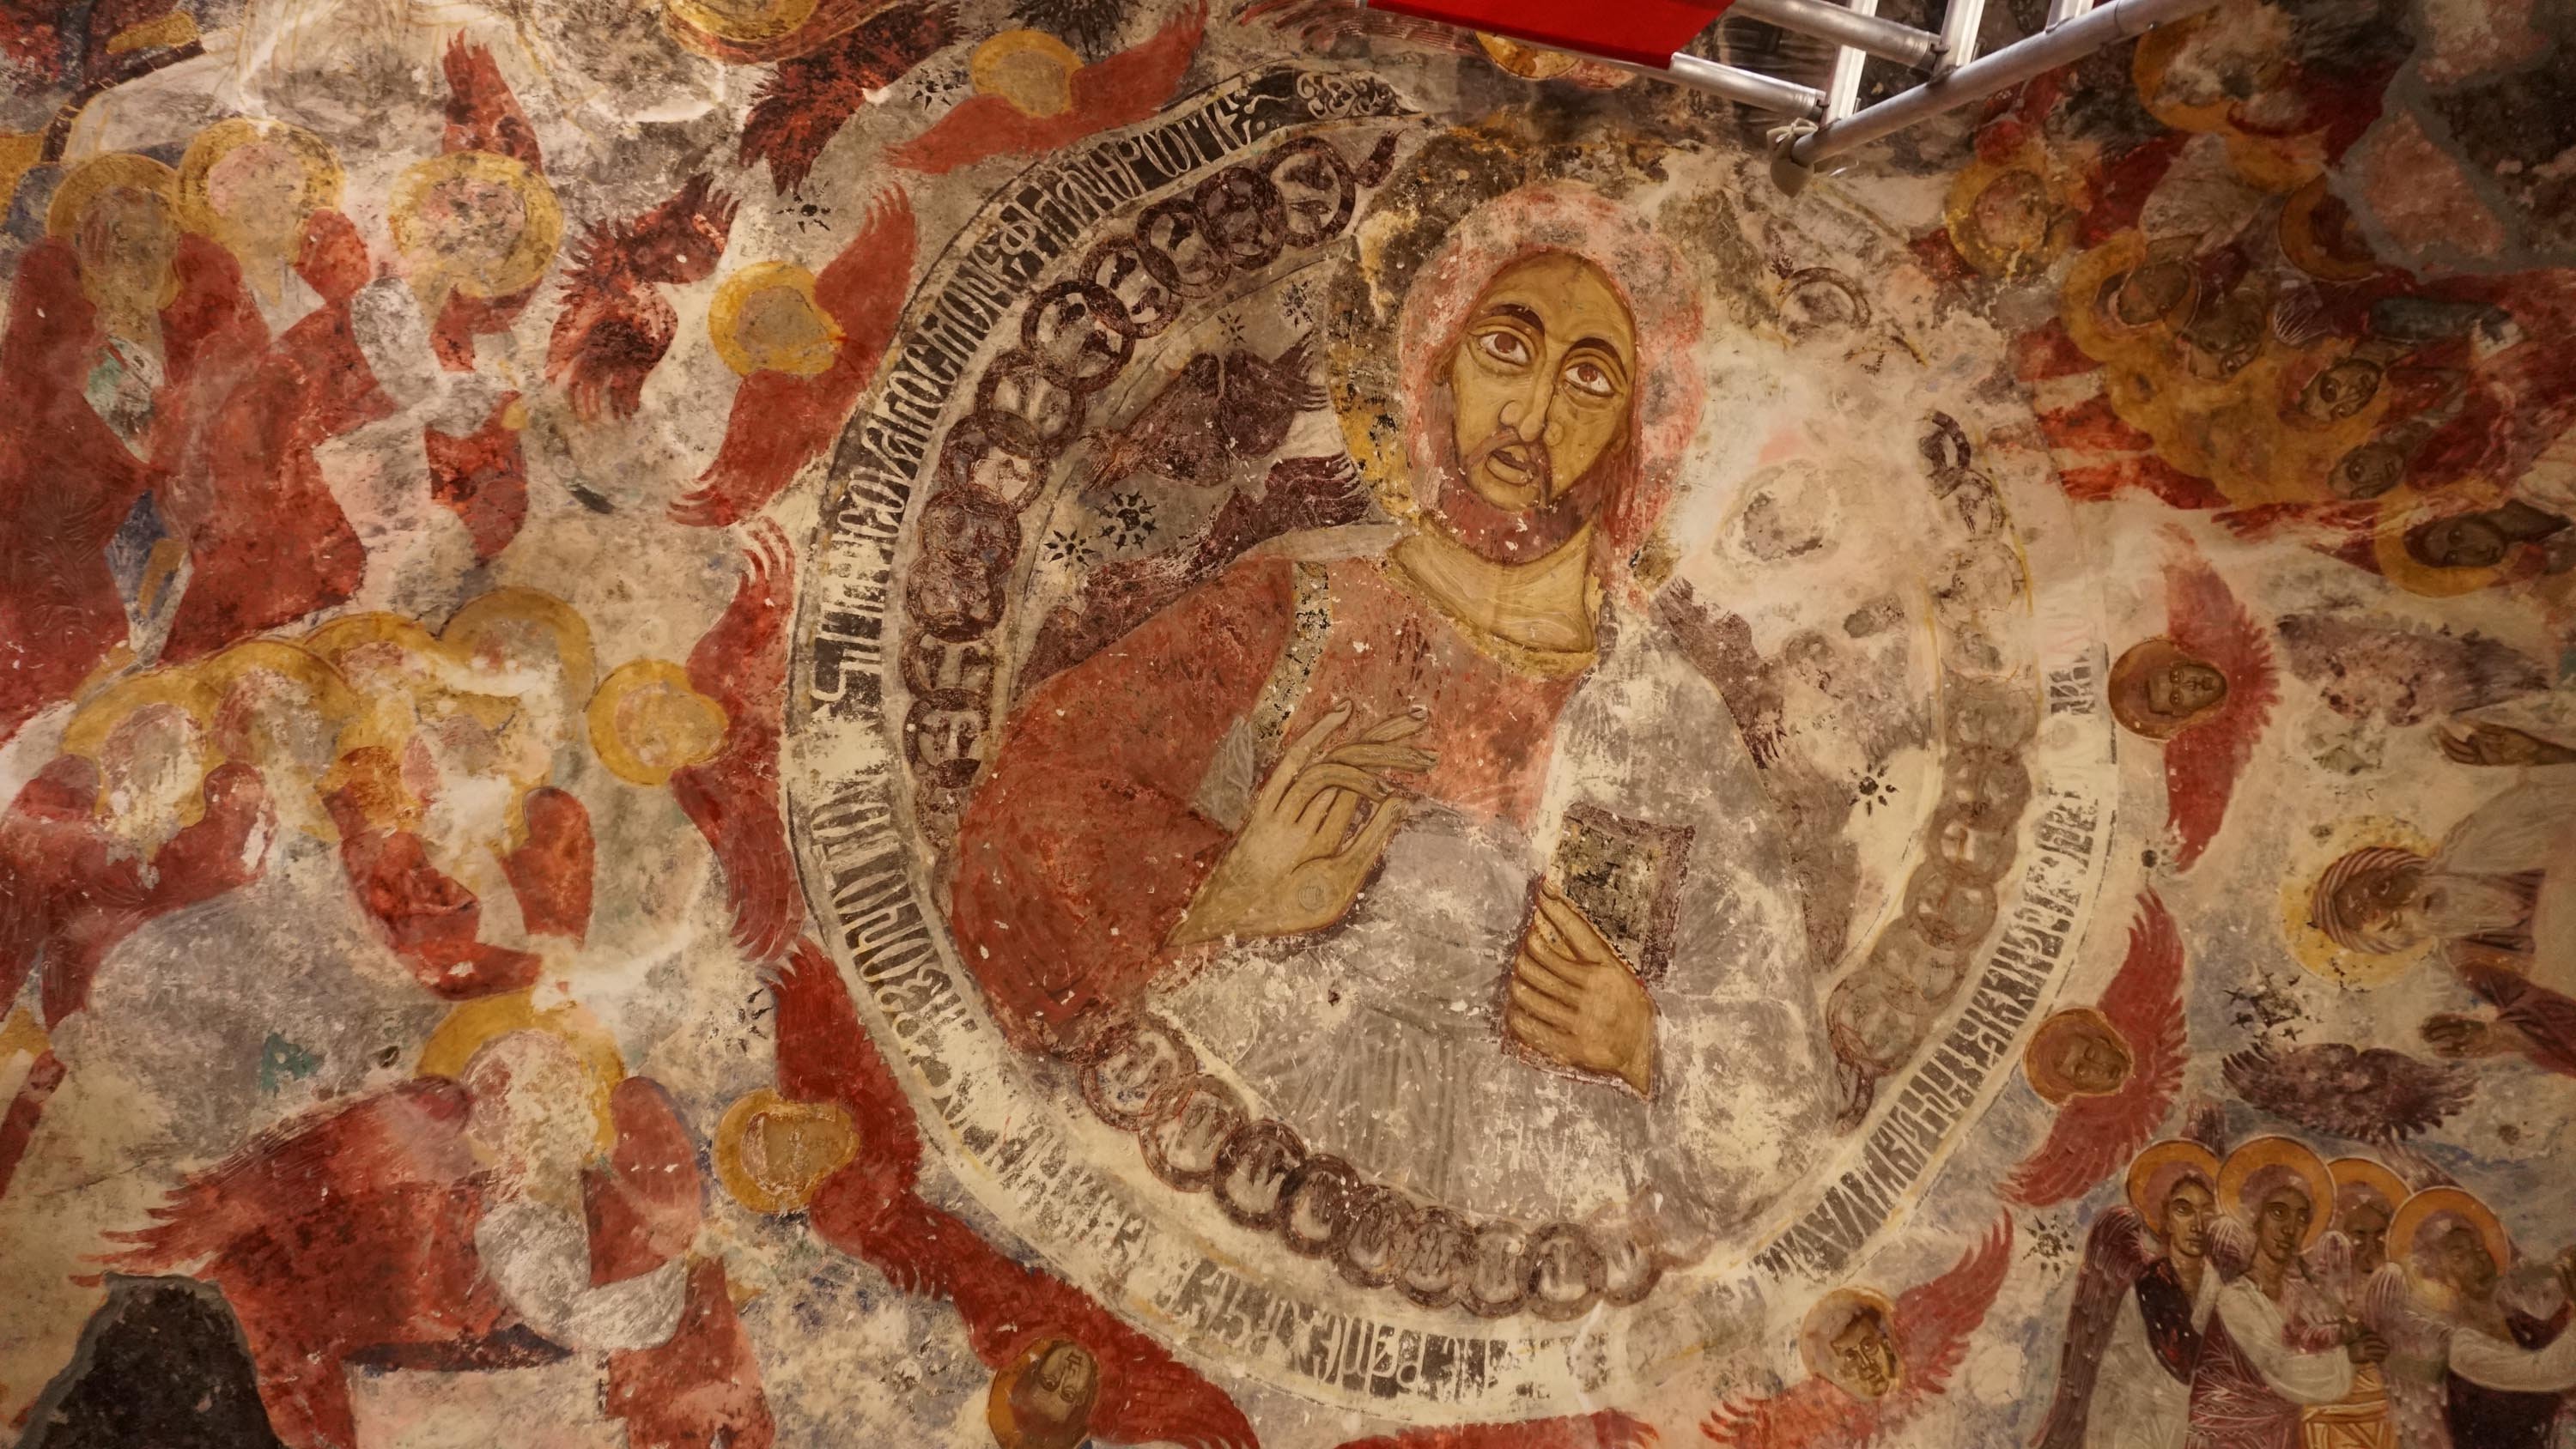 The Sümela Monastery contains many historical frescoes. (DHA Photo)